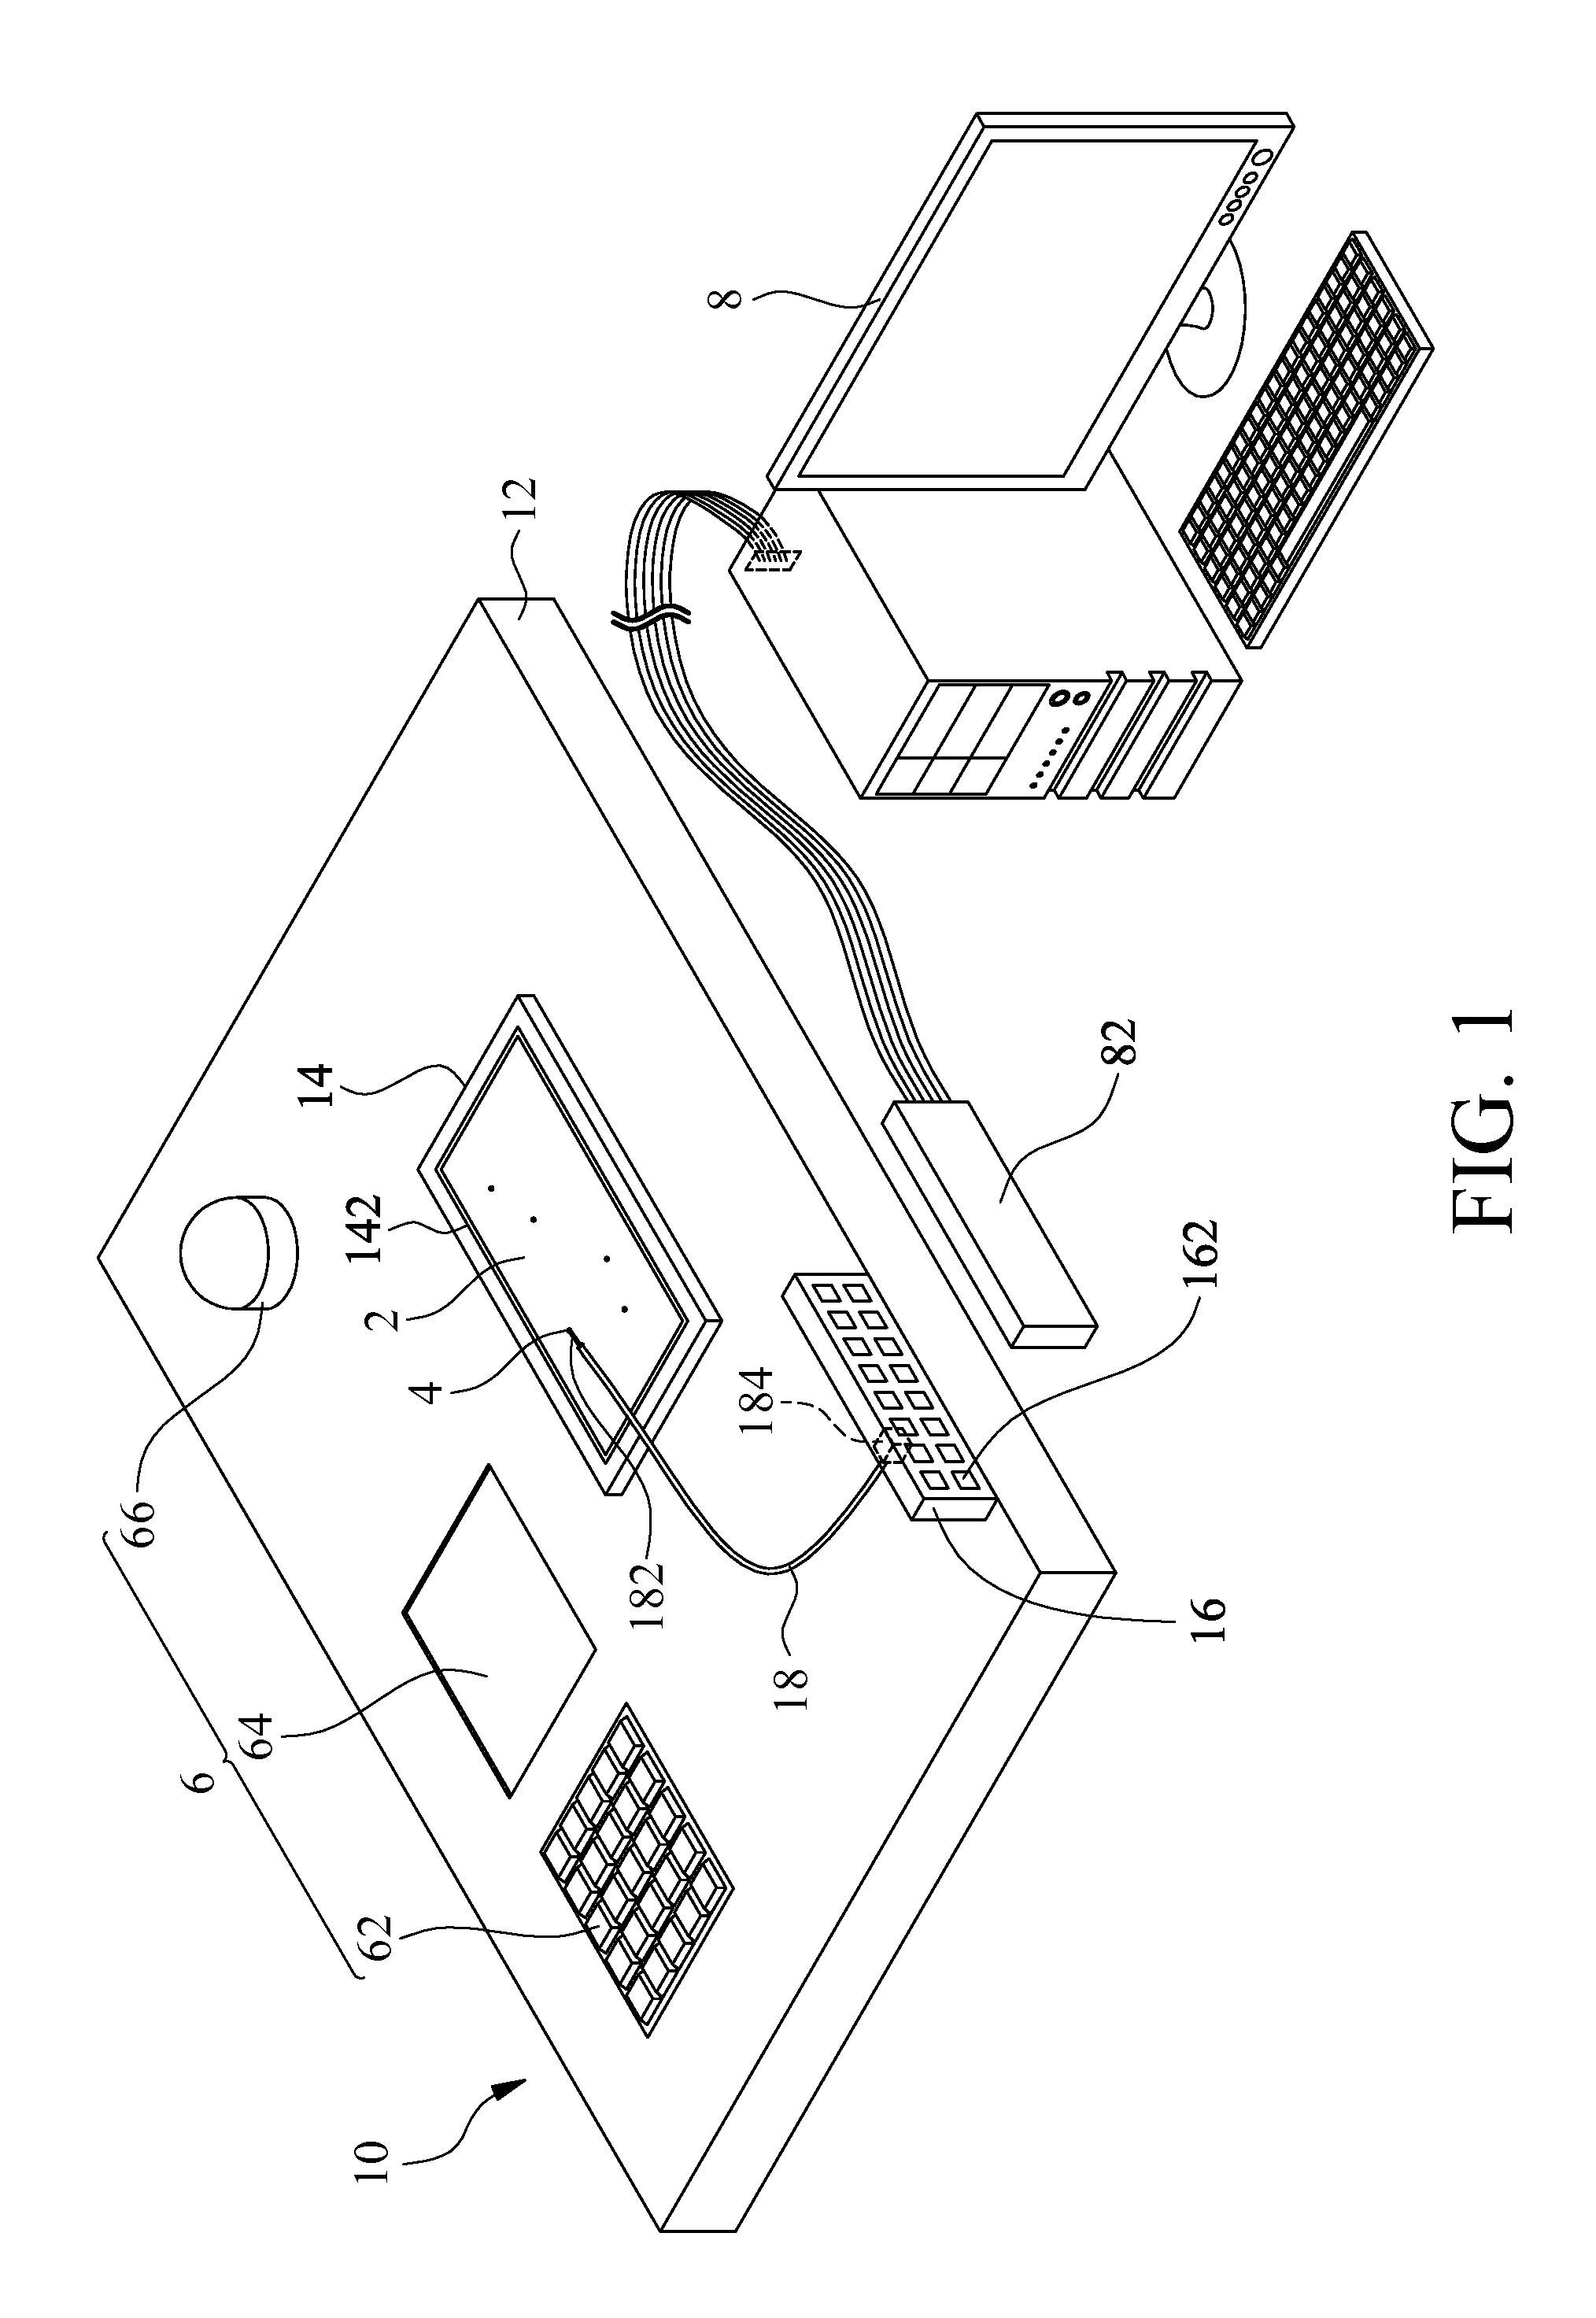 Printed circuit board testing device